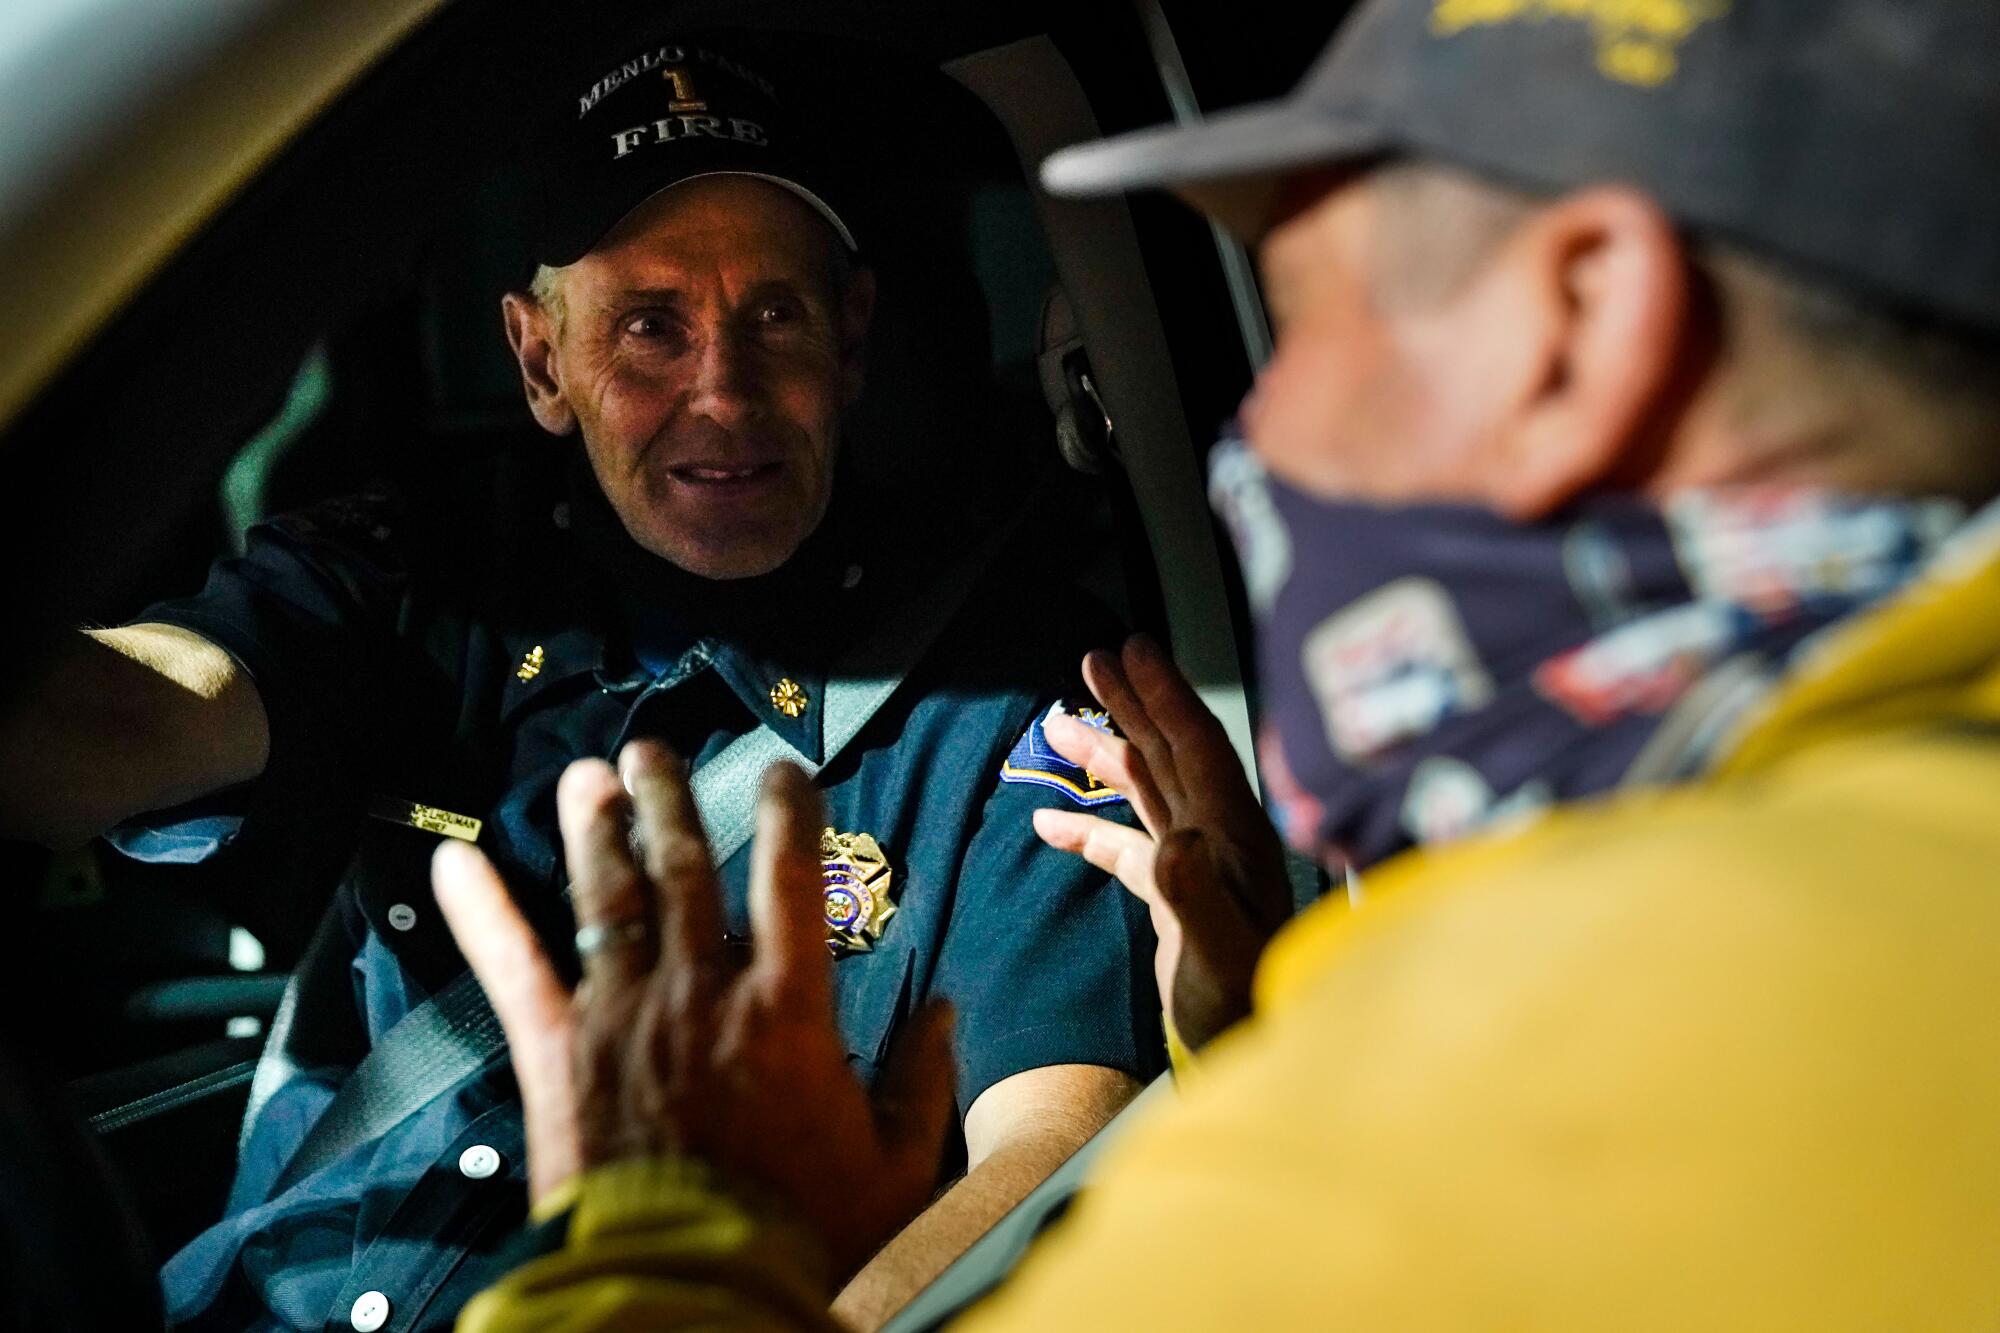 Menlo Park Fire Chief Harold Schapelhouman chats with Carl Kustin, a volunteer firefighter